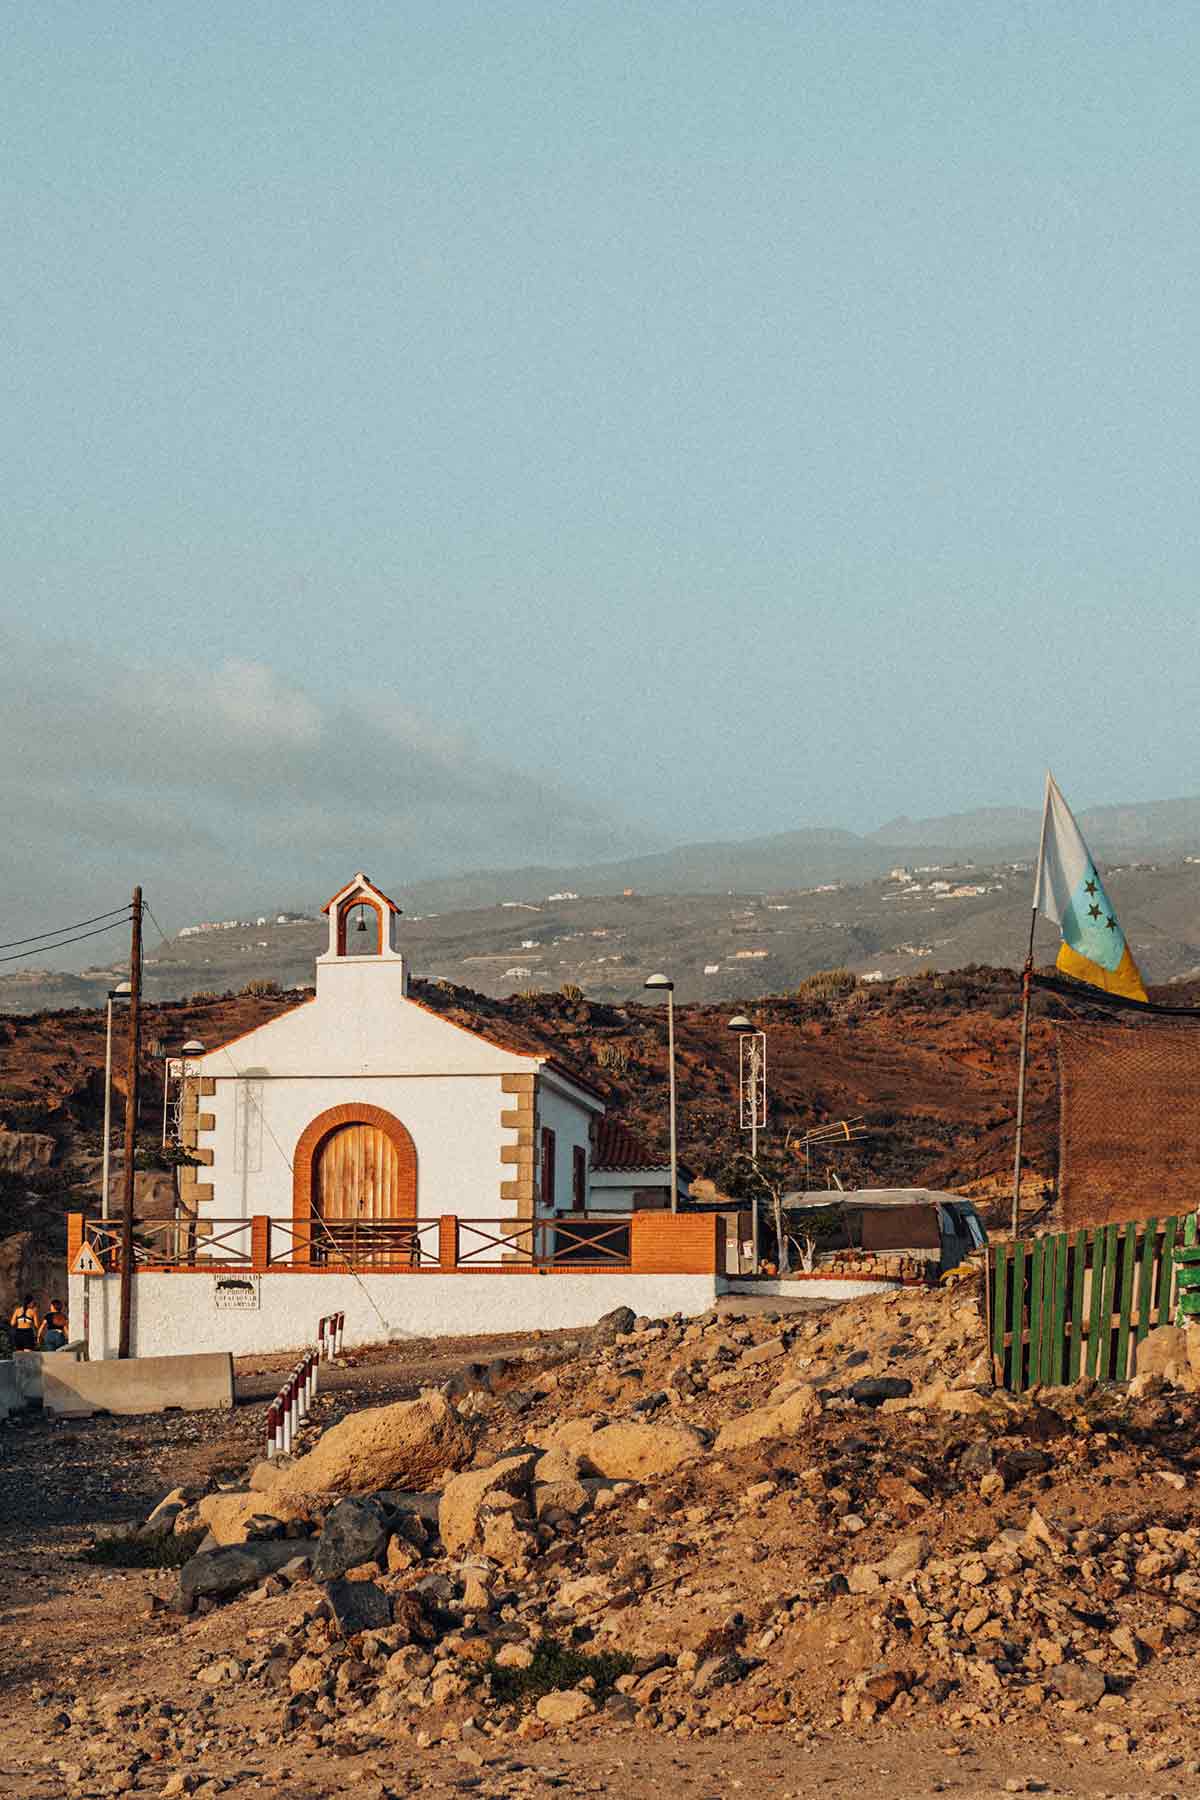 A chapel in El Puertito, Tenerife